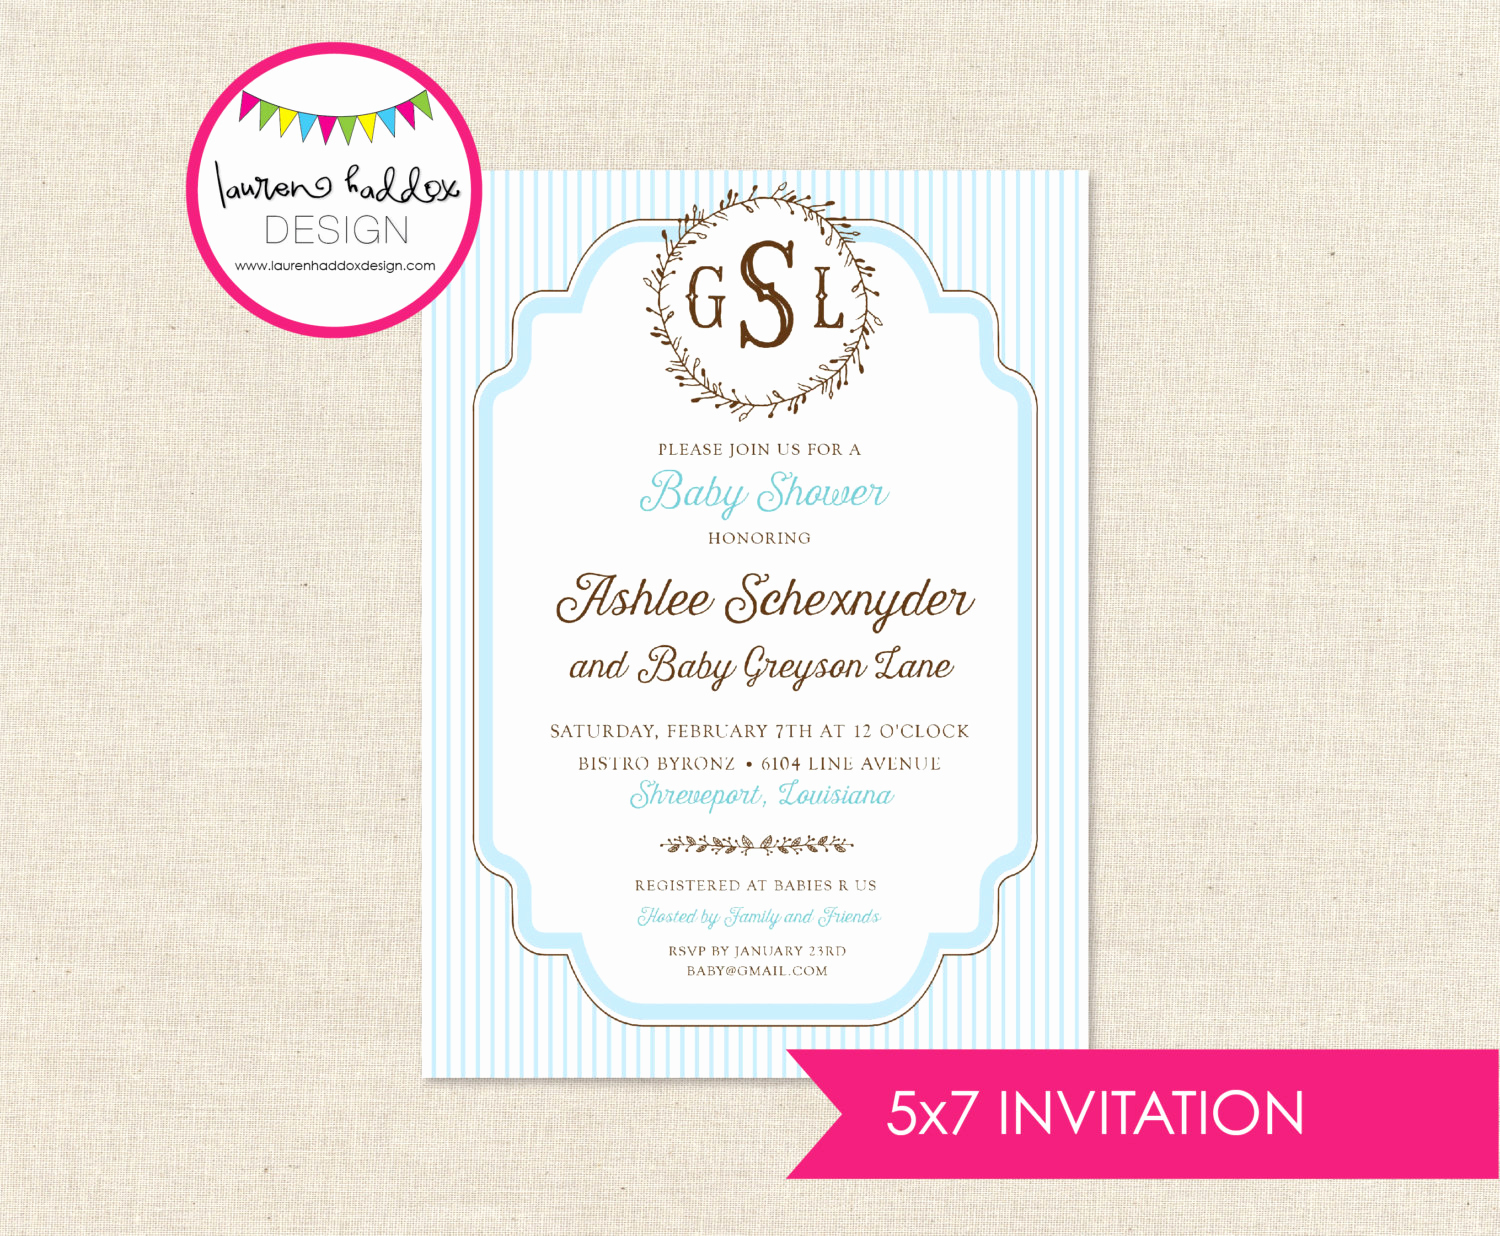 Diy Baby Shower Invitation Kits Awesome Diy Monogram Baby Shower Invitation Only